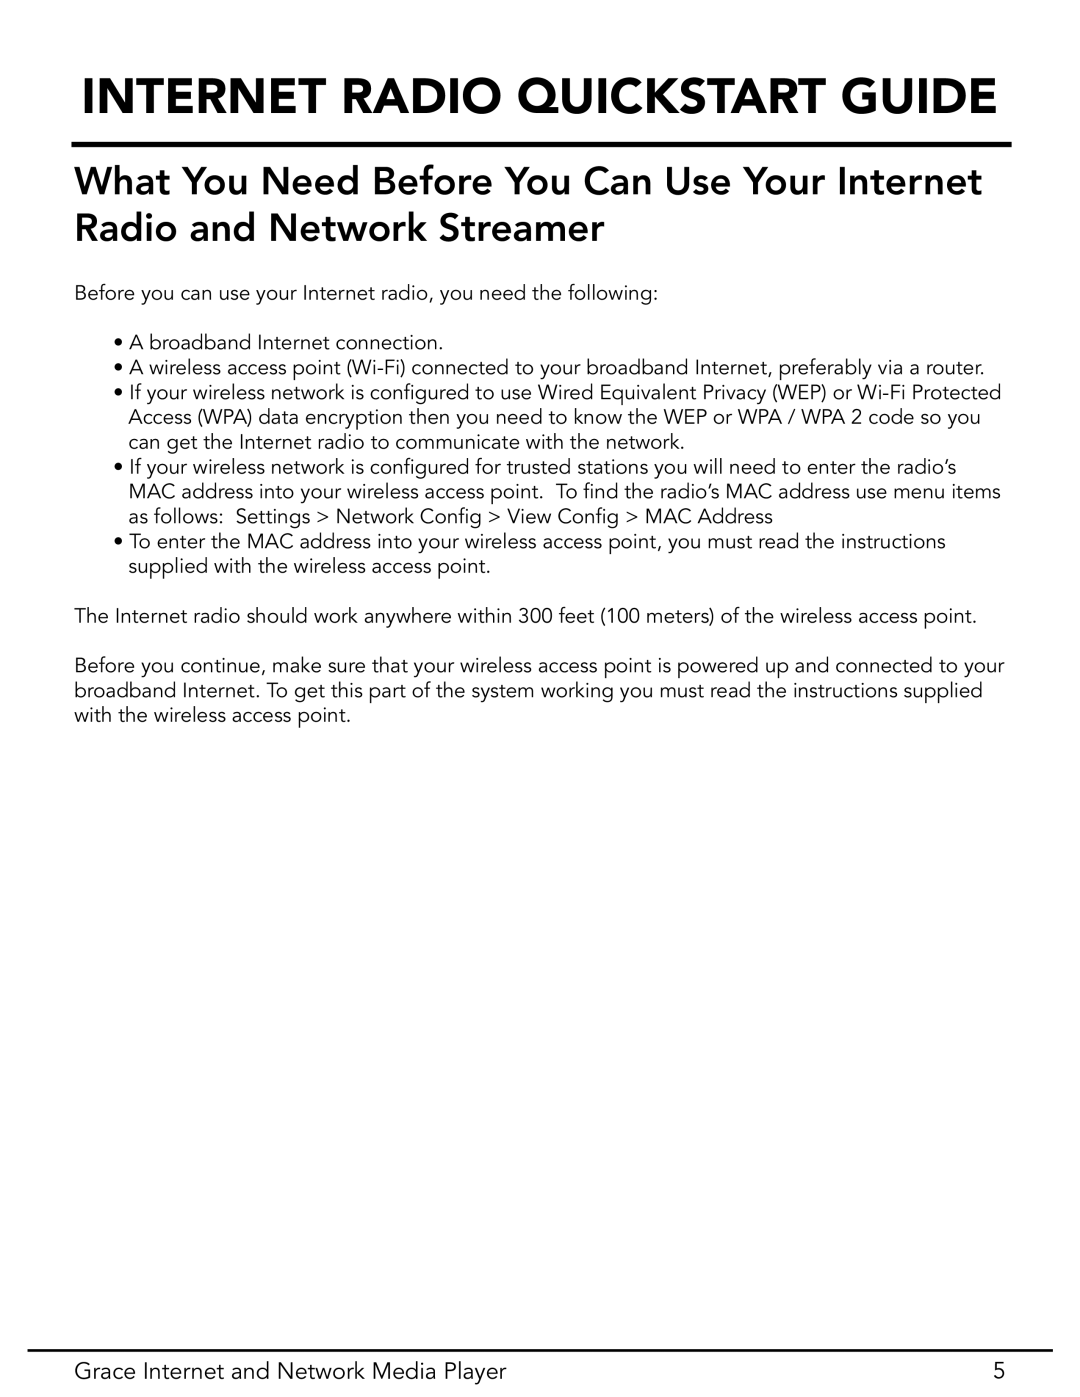 Grace GDI-IR3020 manual Internet Radio Quickstart Guide, Grace Internet and Network Media Player 